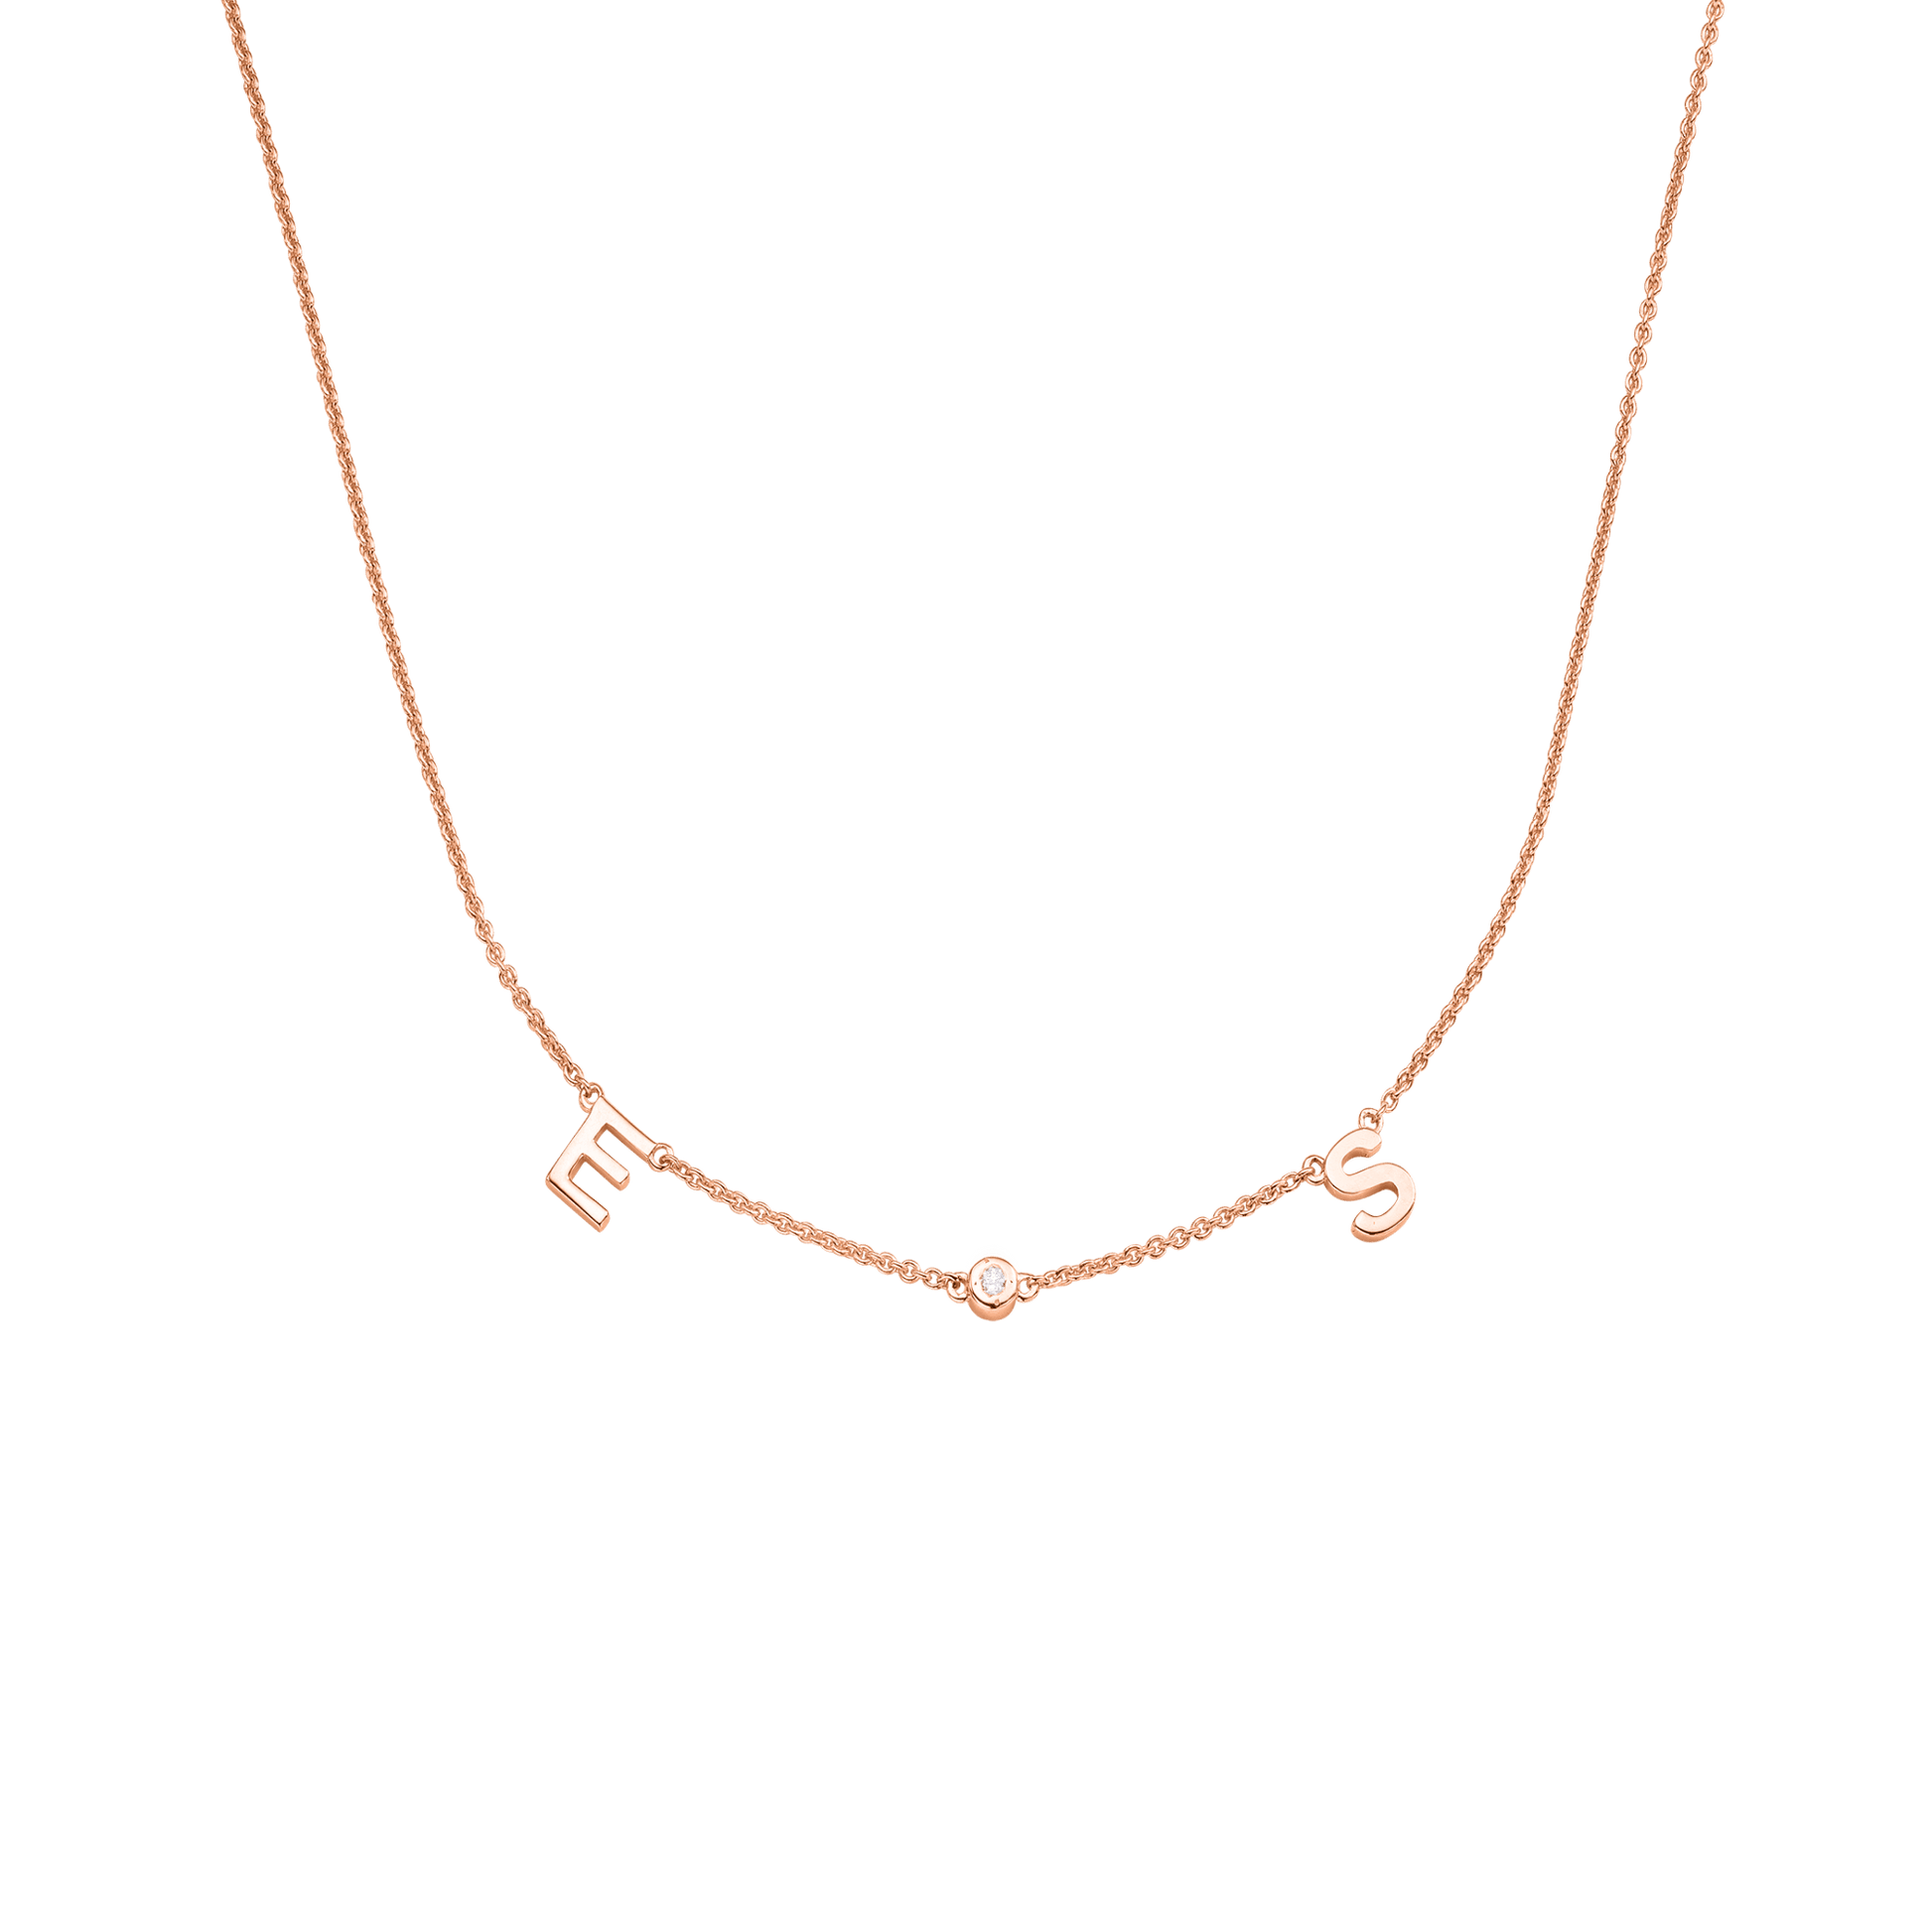 Initial Necklace with Diamonds - 18K Rose Vermeil Necklaces magal-dev 1 Initial + 1 Diamond Adjustable 16-17" (40cm-43cm) 